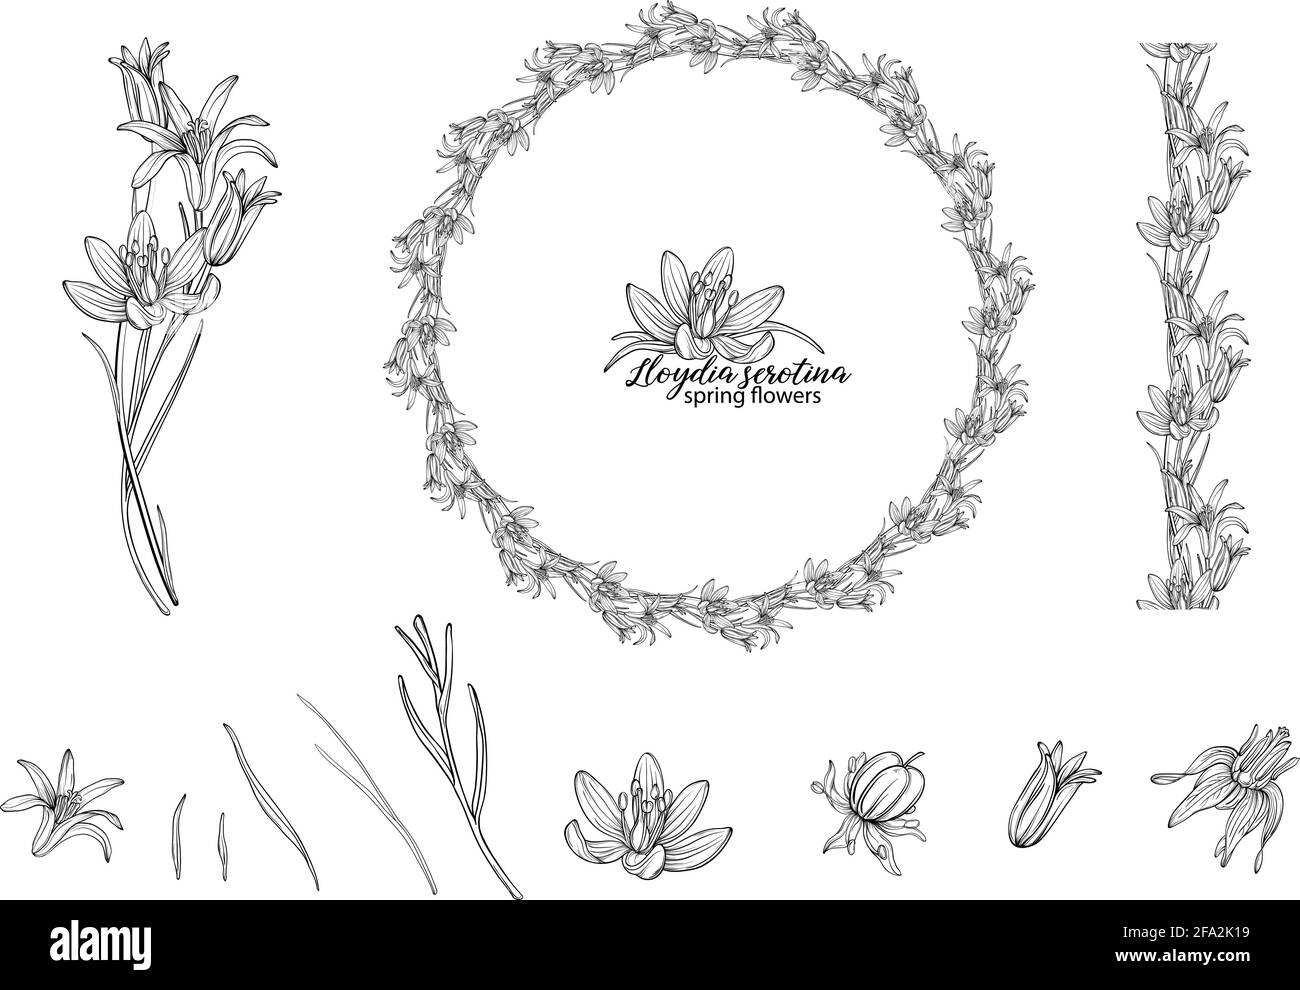 Set of floral elements of Lloydia serotina flowers. Spring flowers. Lloydia serotina Stock Vector